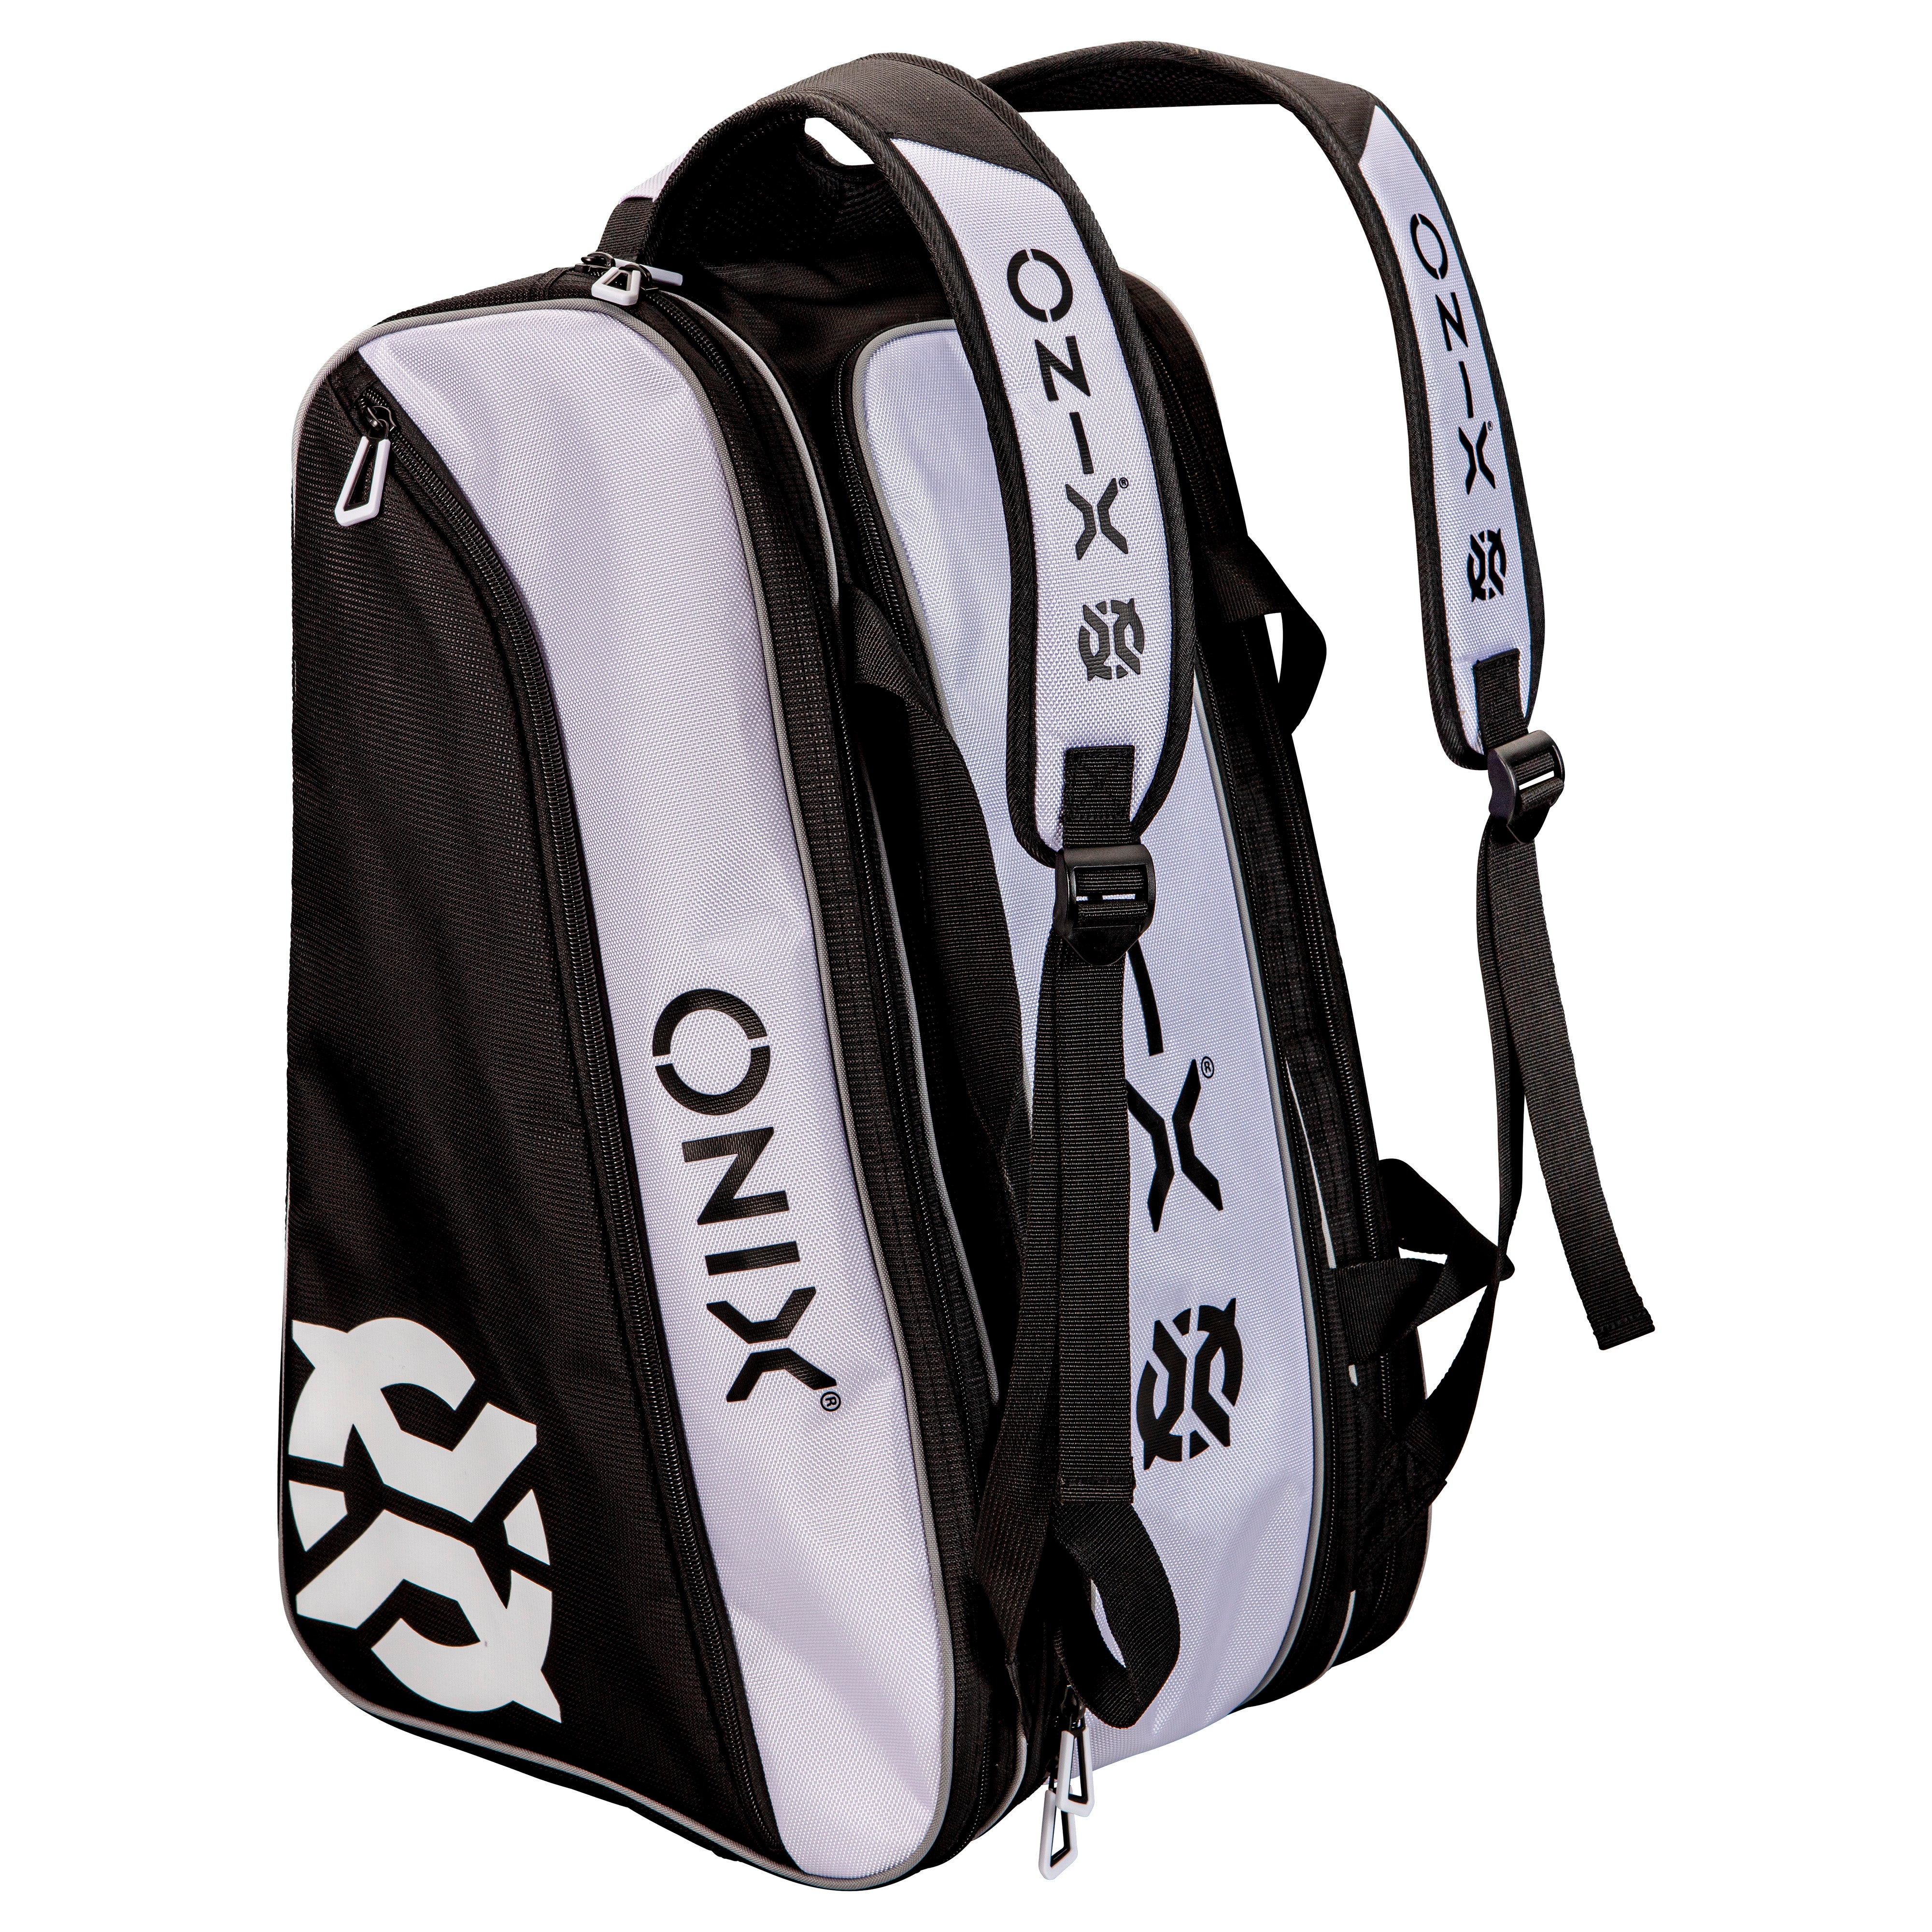 ZOEA Tennis Bag Tennis Backpack Pickleball Bag Tennis Bags for Men